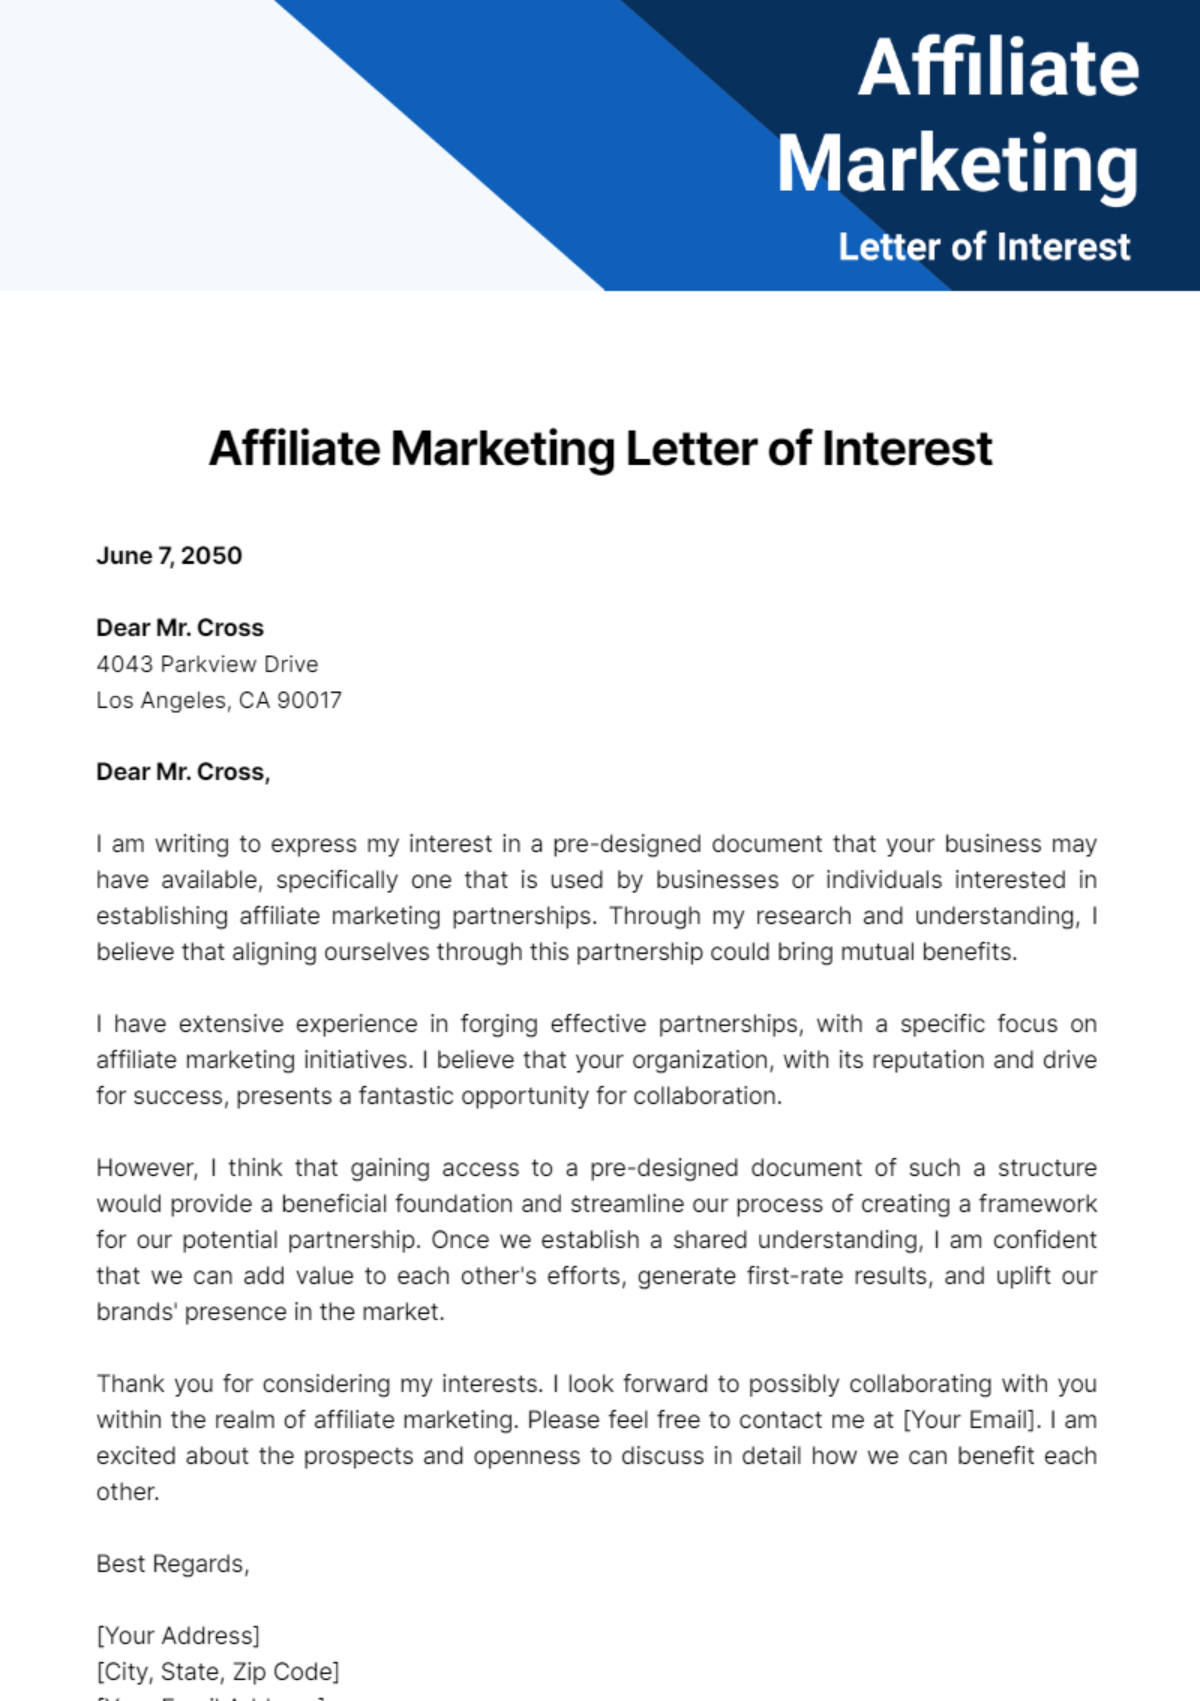 Affiliate Marketing Letter of Interest Template